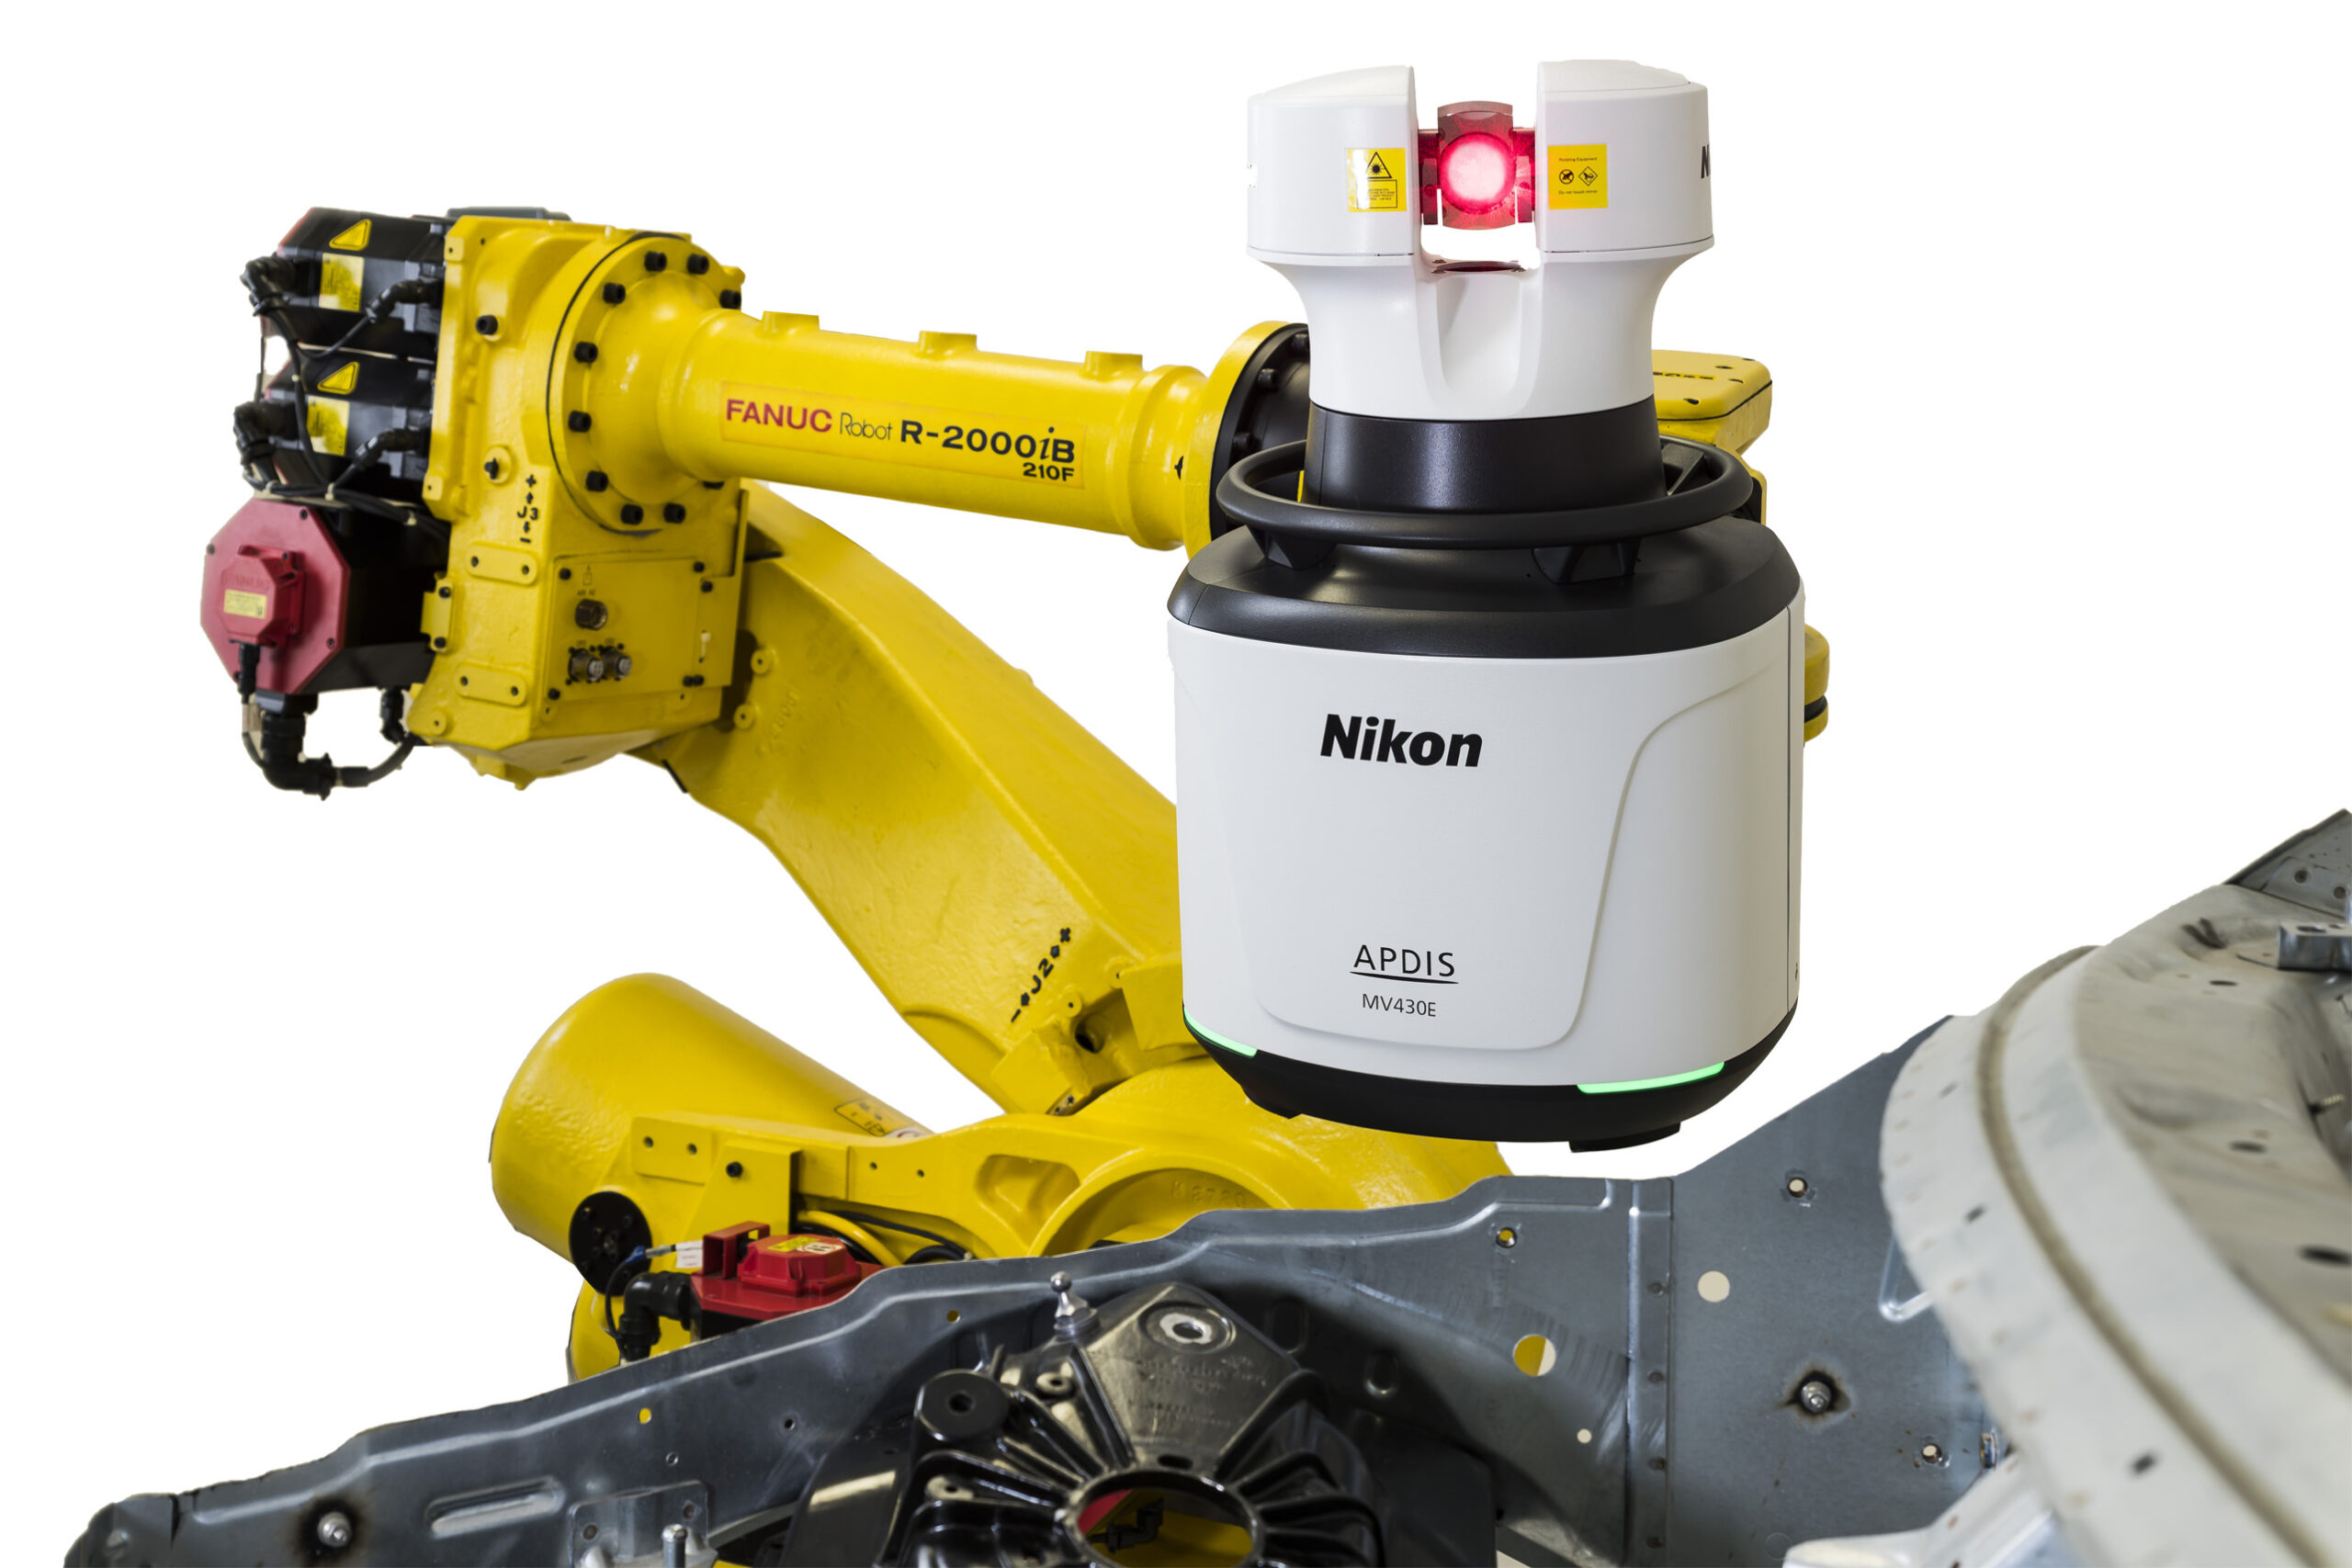 Nikon APDIS Laser Radar Automotive MV430E